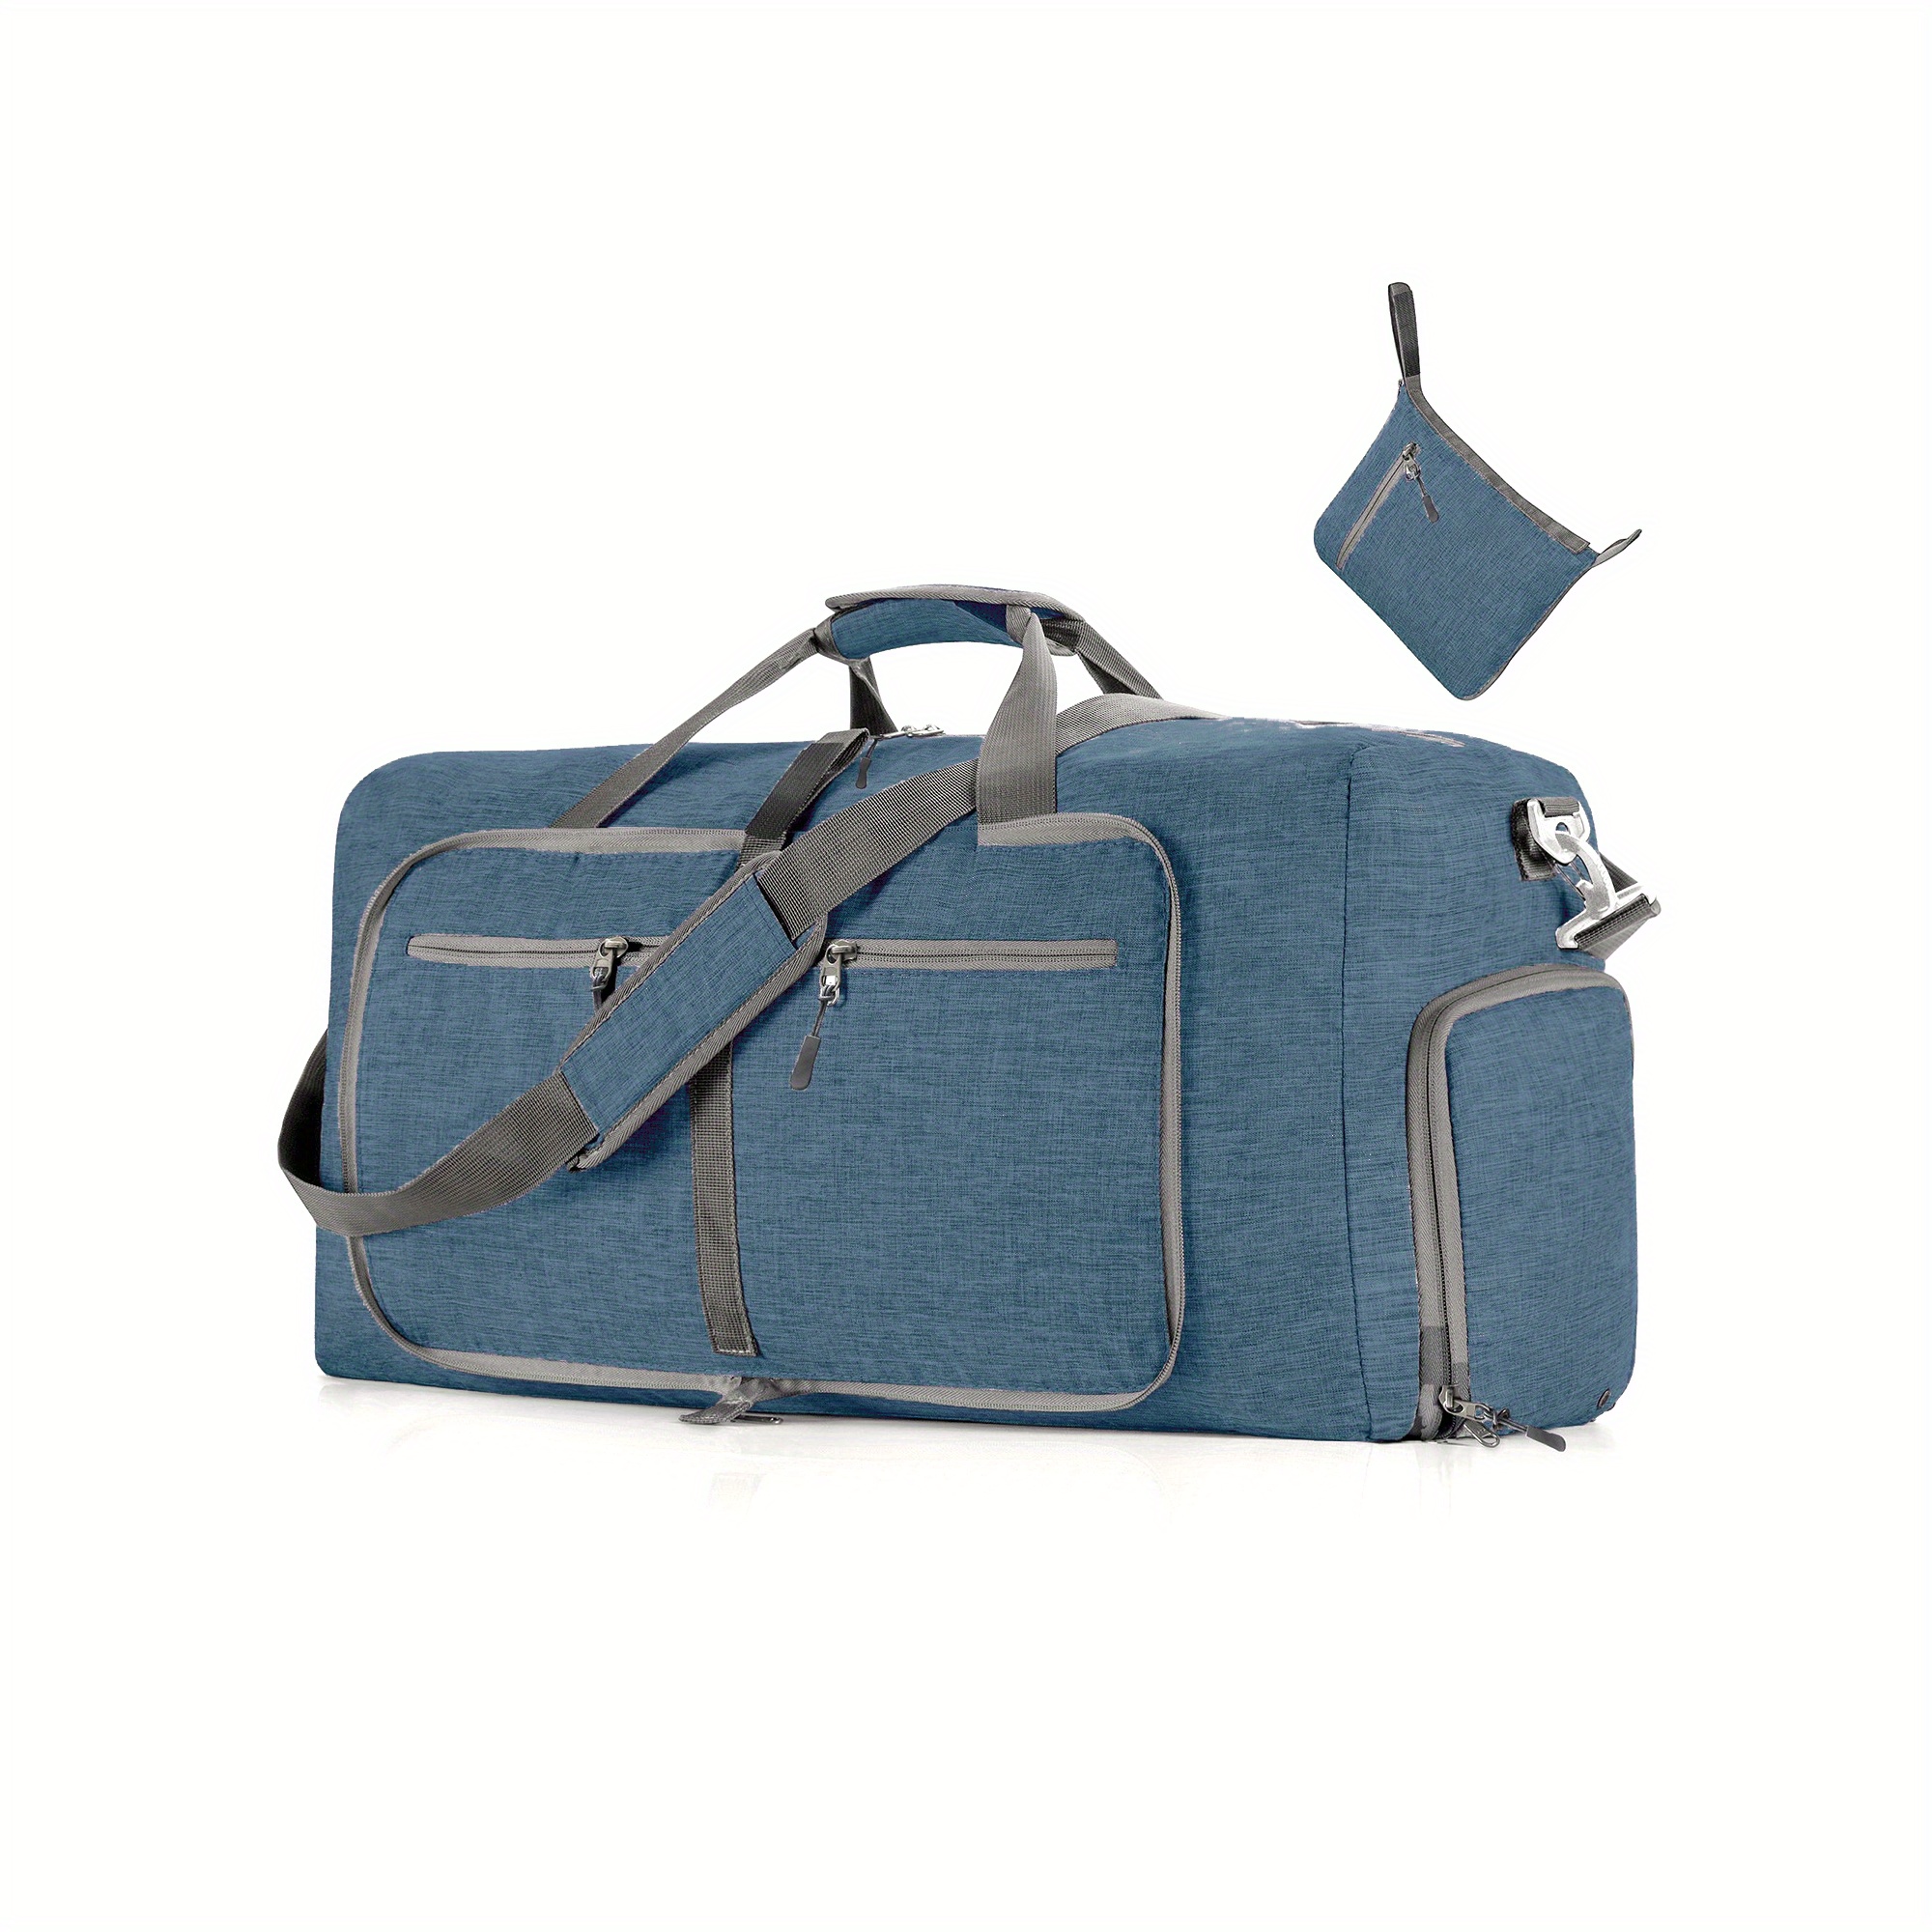 Gonex Packable Travel Duffle Bags, Rolling Duffle Bags